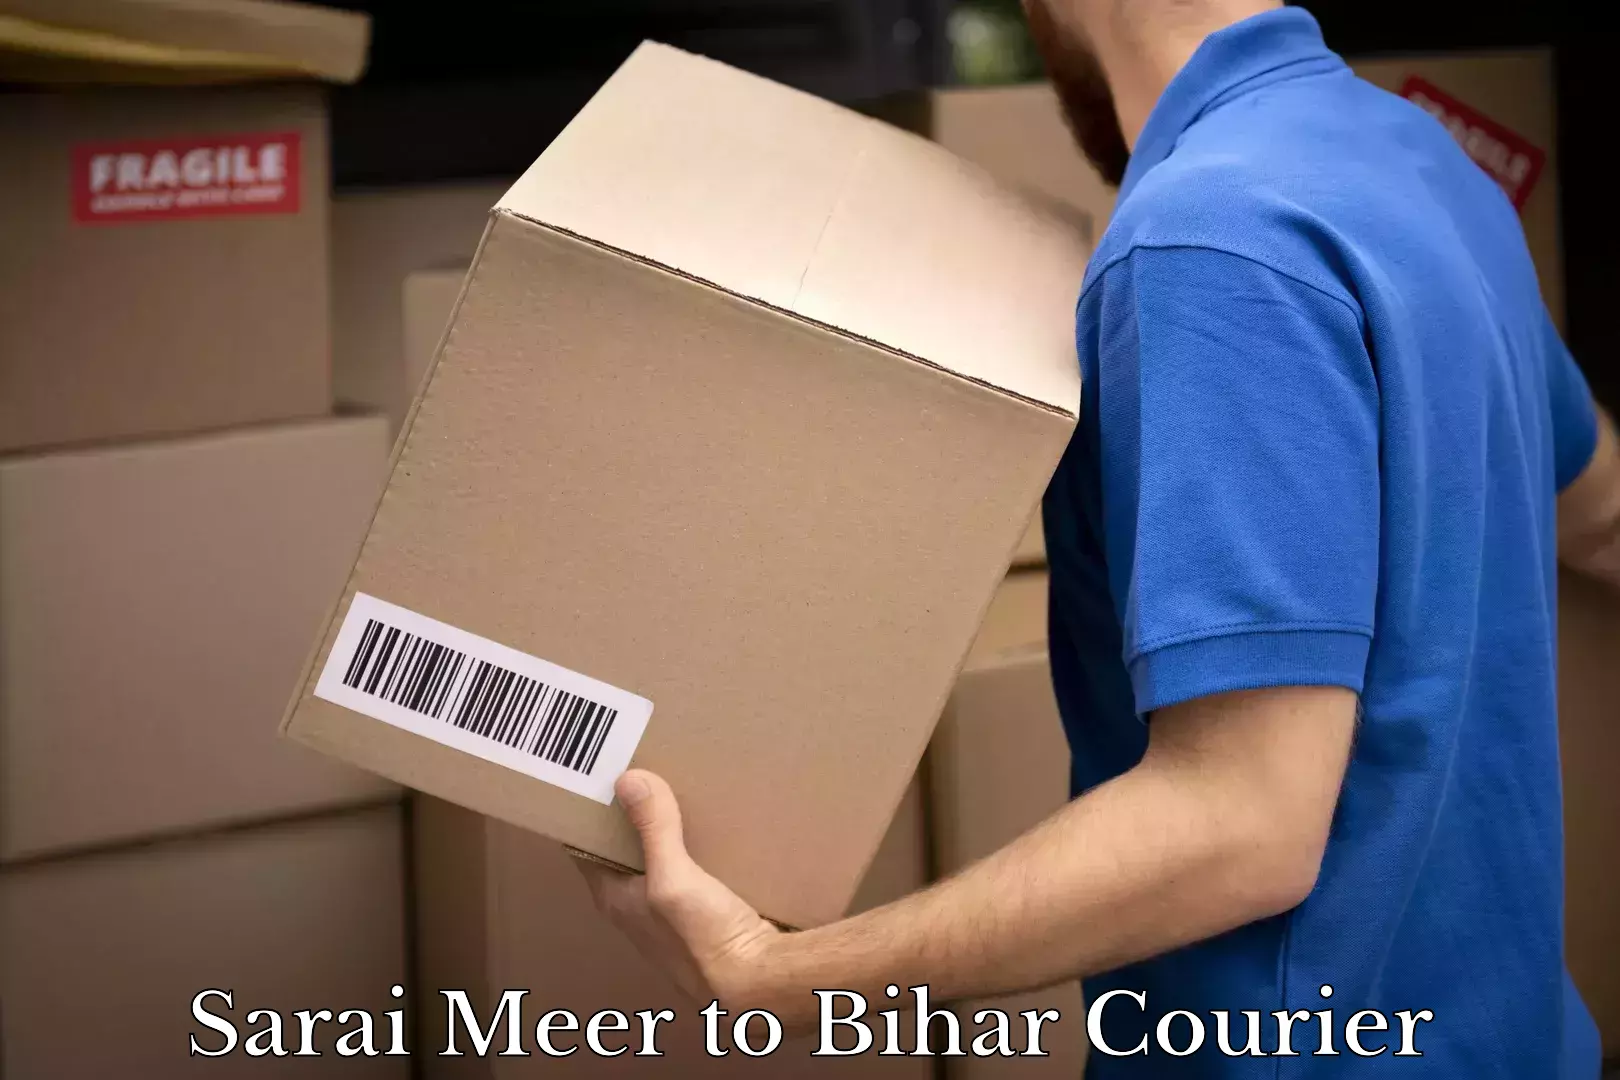 Courier service innovation Sarai Meer to Bihar